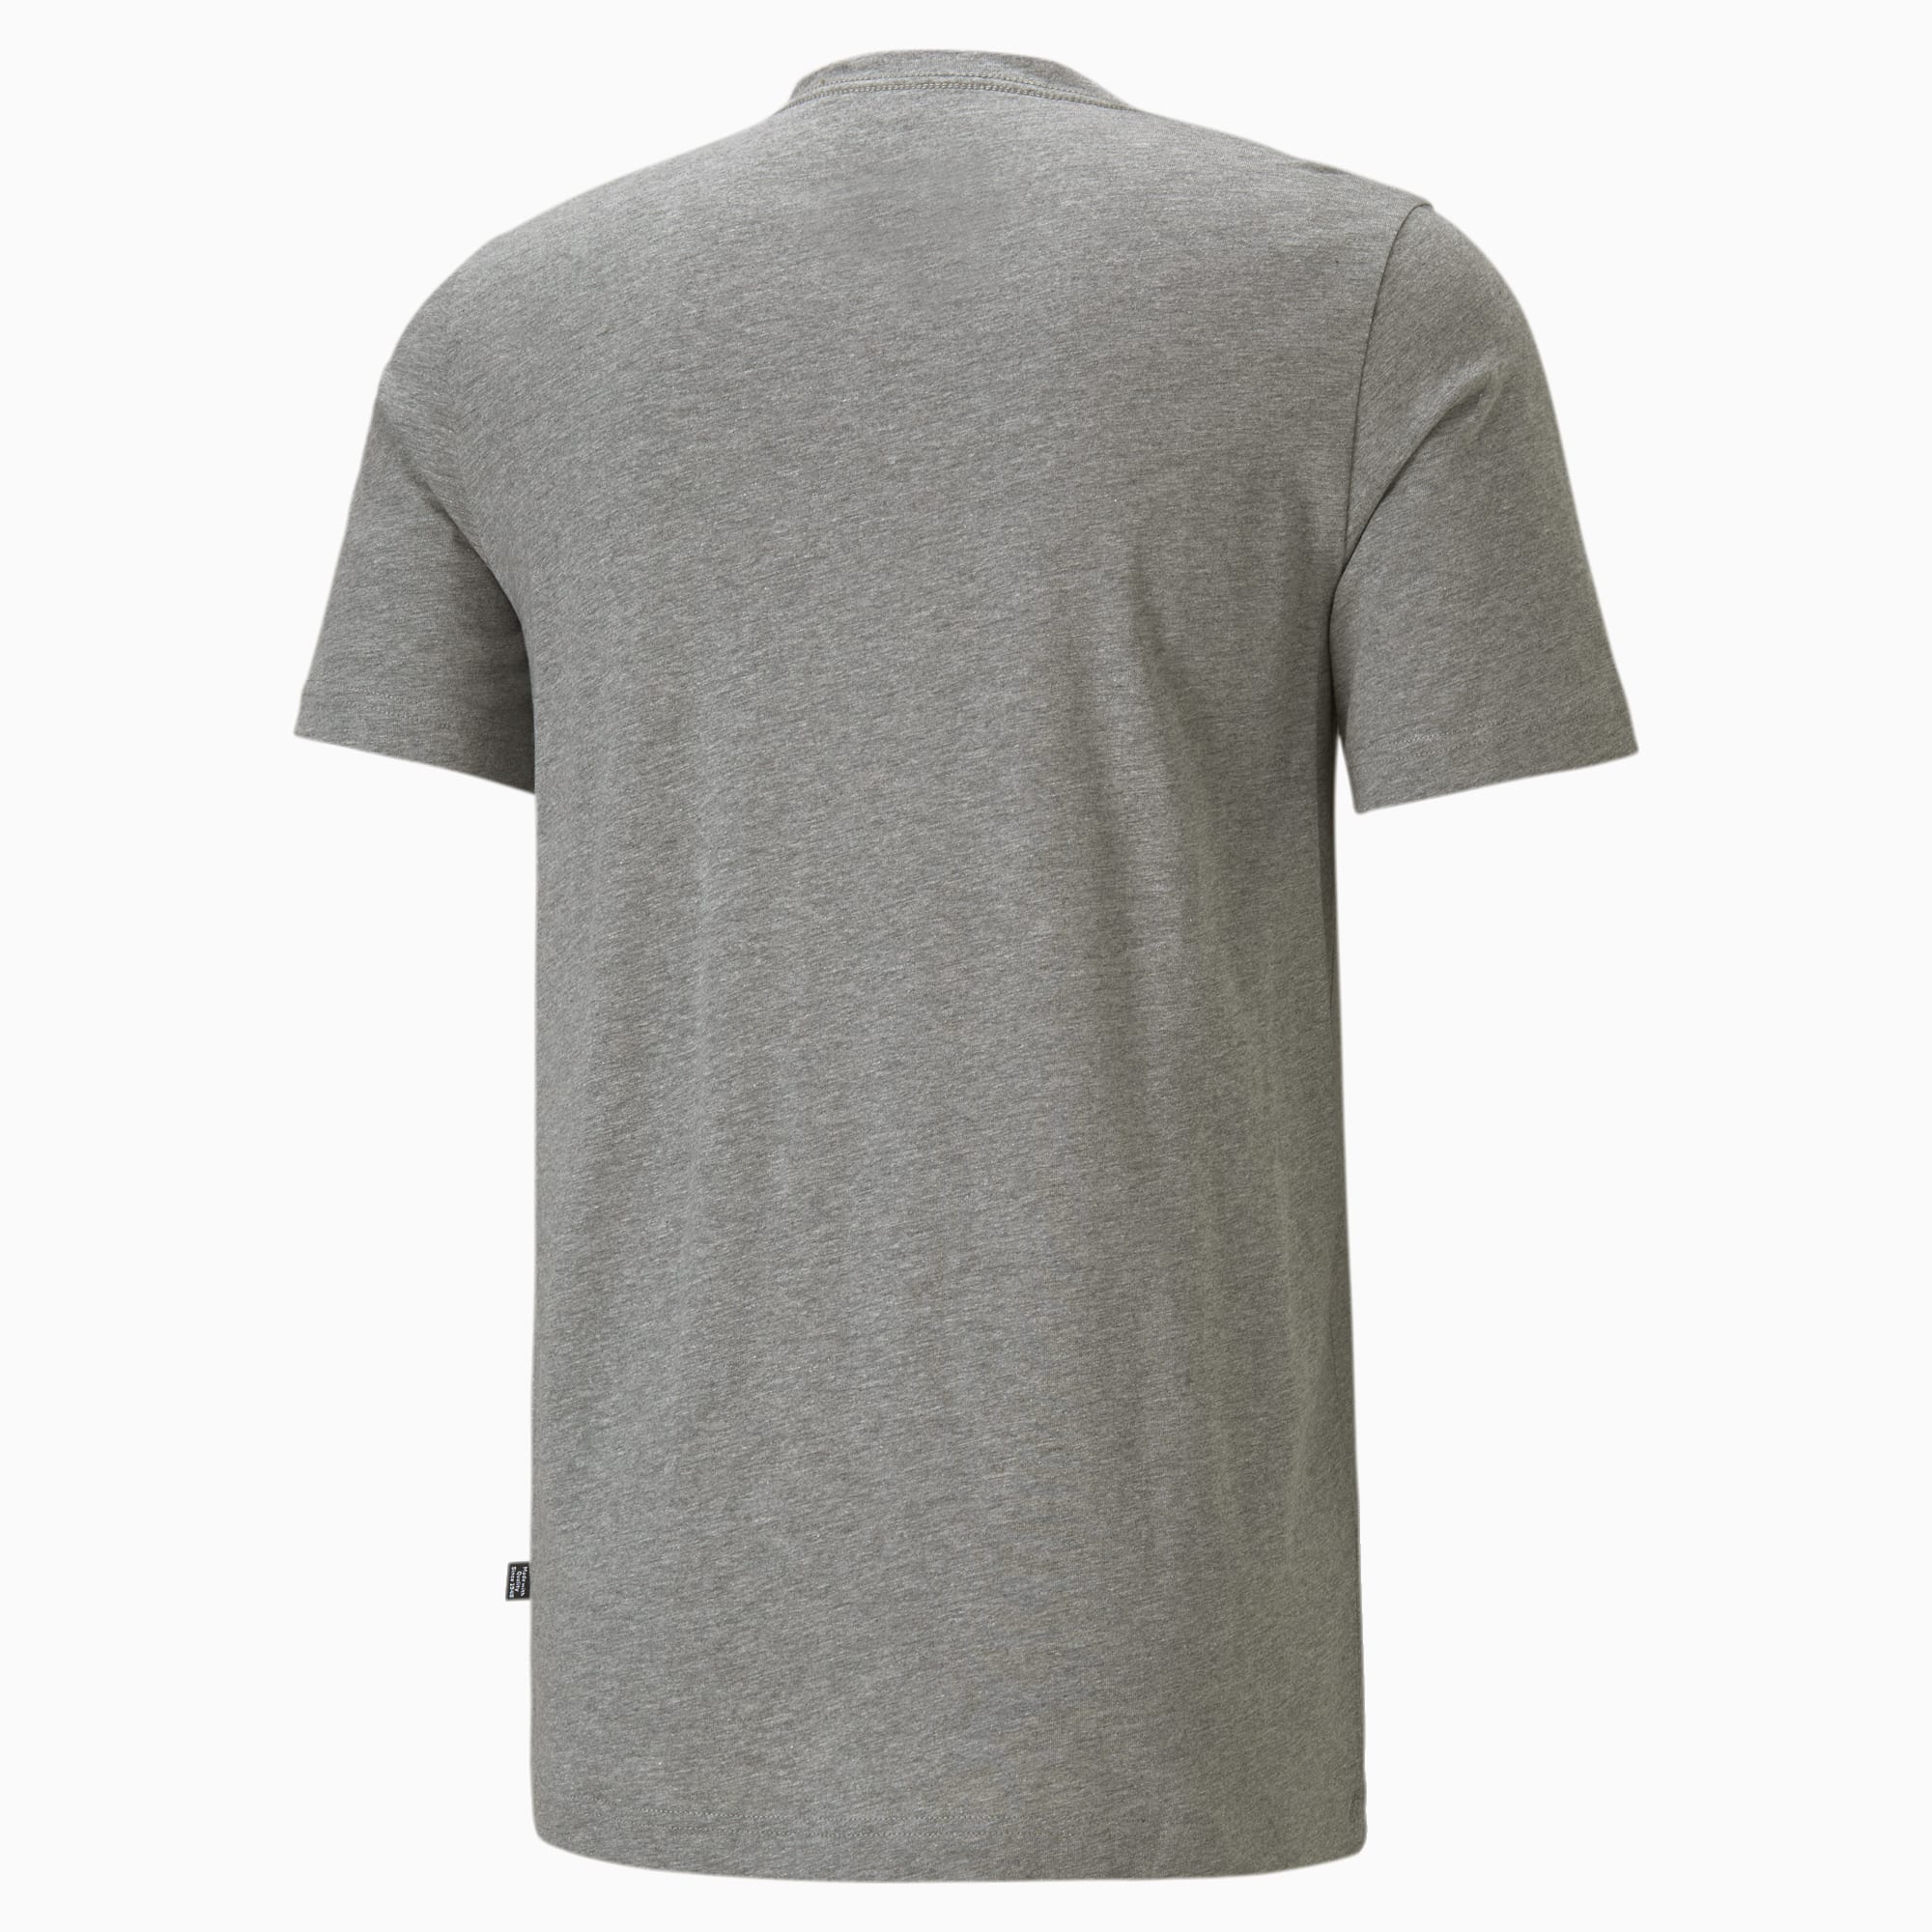 PUMA Essentials V-Neck T-Shirt Men, Medium Grey Heather, Size 5XL, Clothing